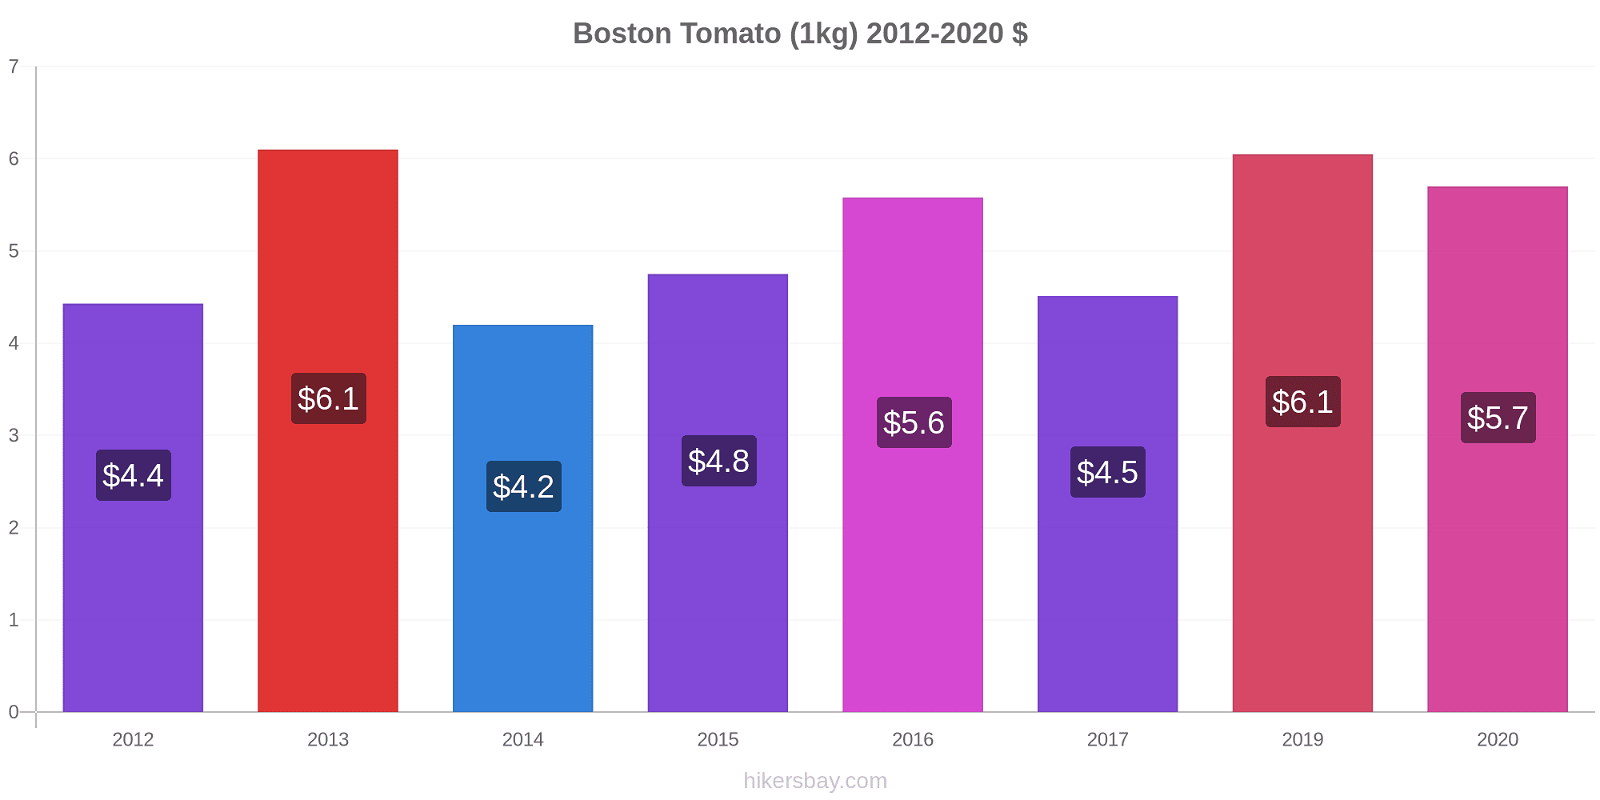 Boston price changes Tomato (1kg) hikersbay.com